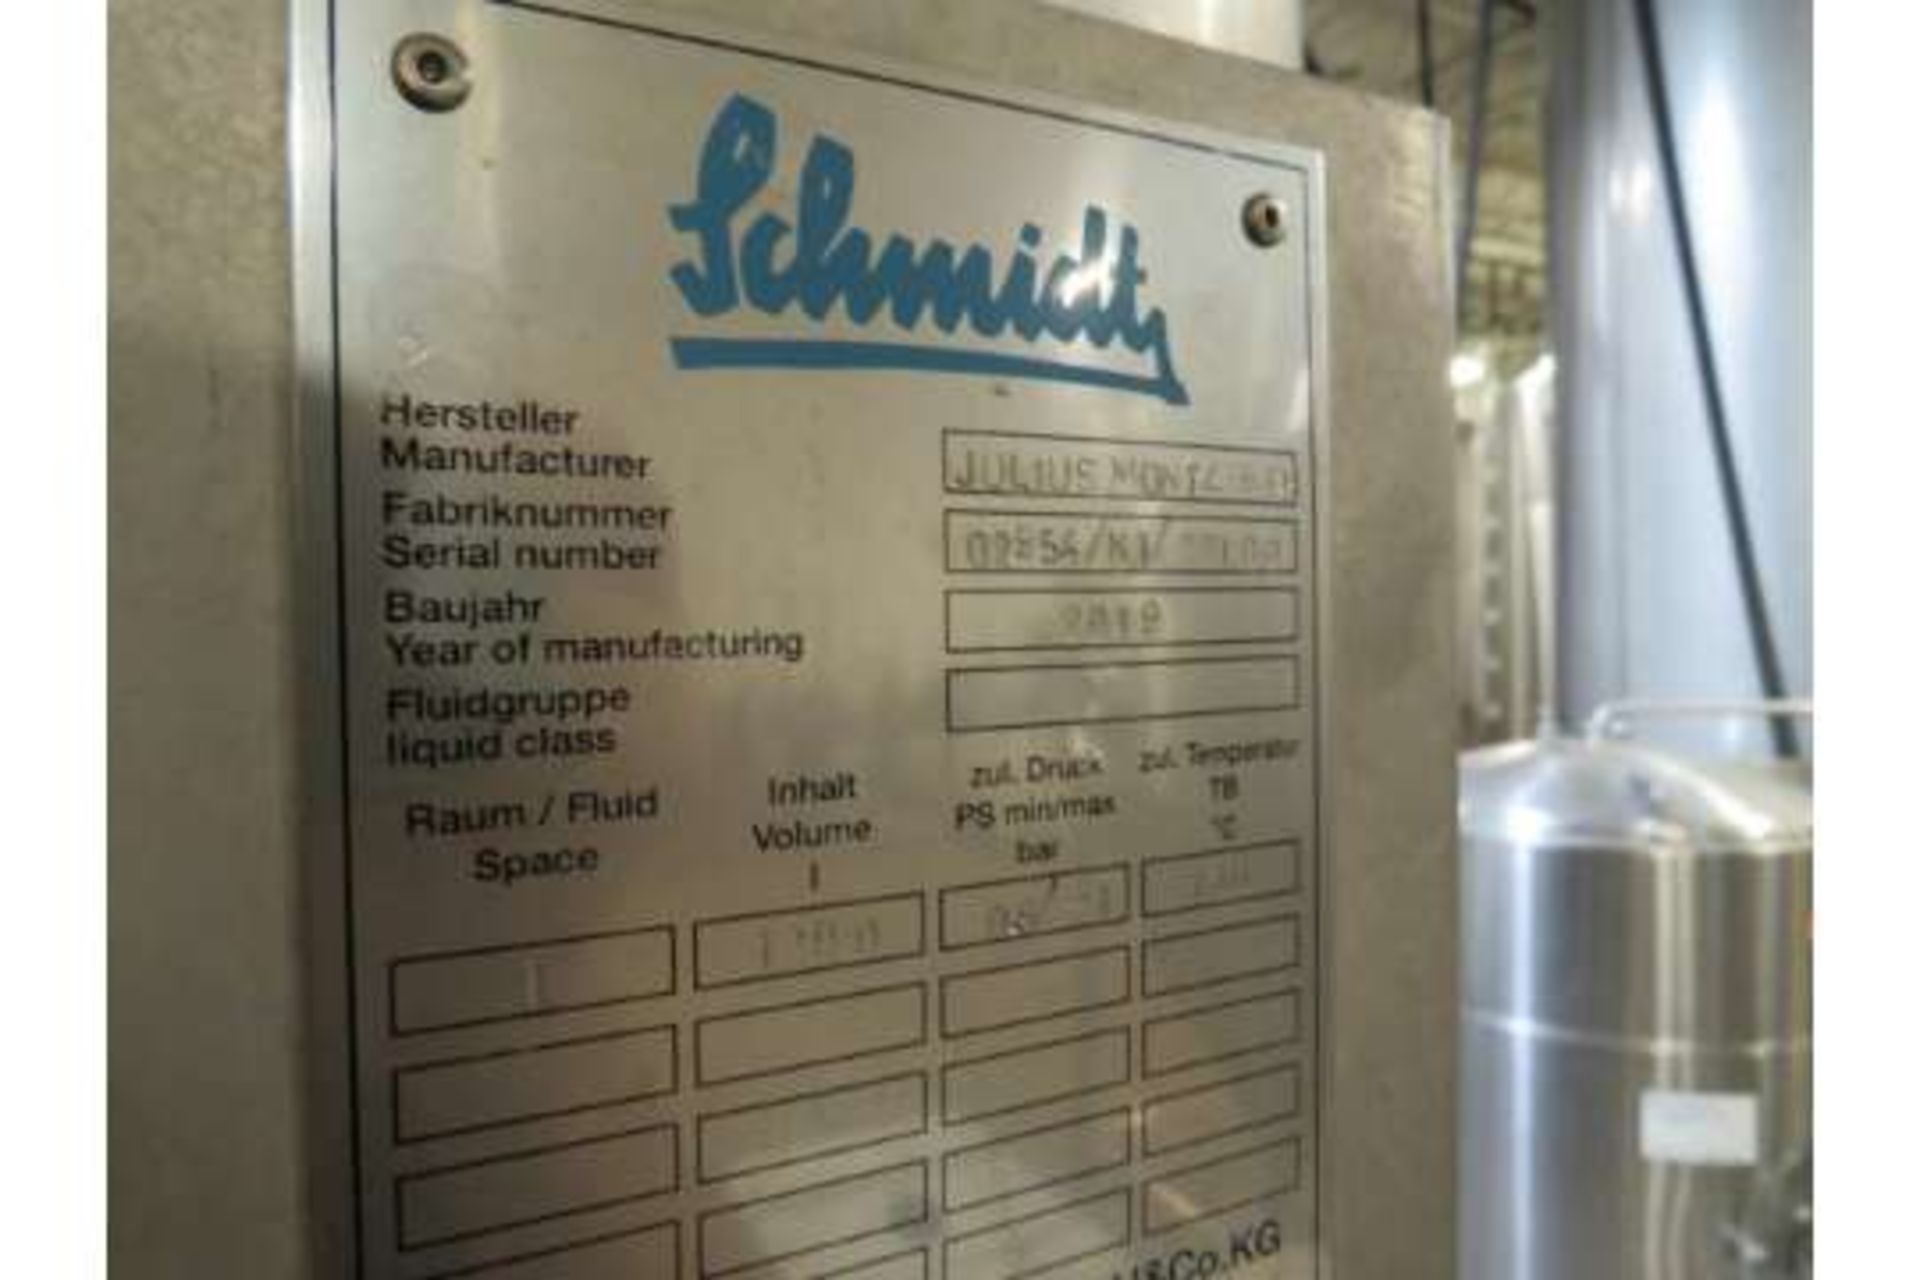 2019 Sigmatec/Schmidt/Julius Montz Gmbh 15- HL Modular De-Alcoholization Plant, Equipped with (2) - Image 18 of 19